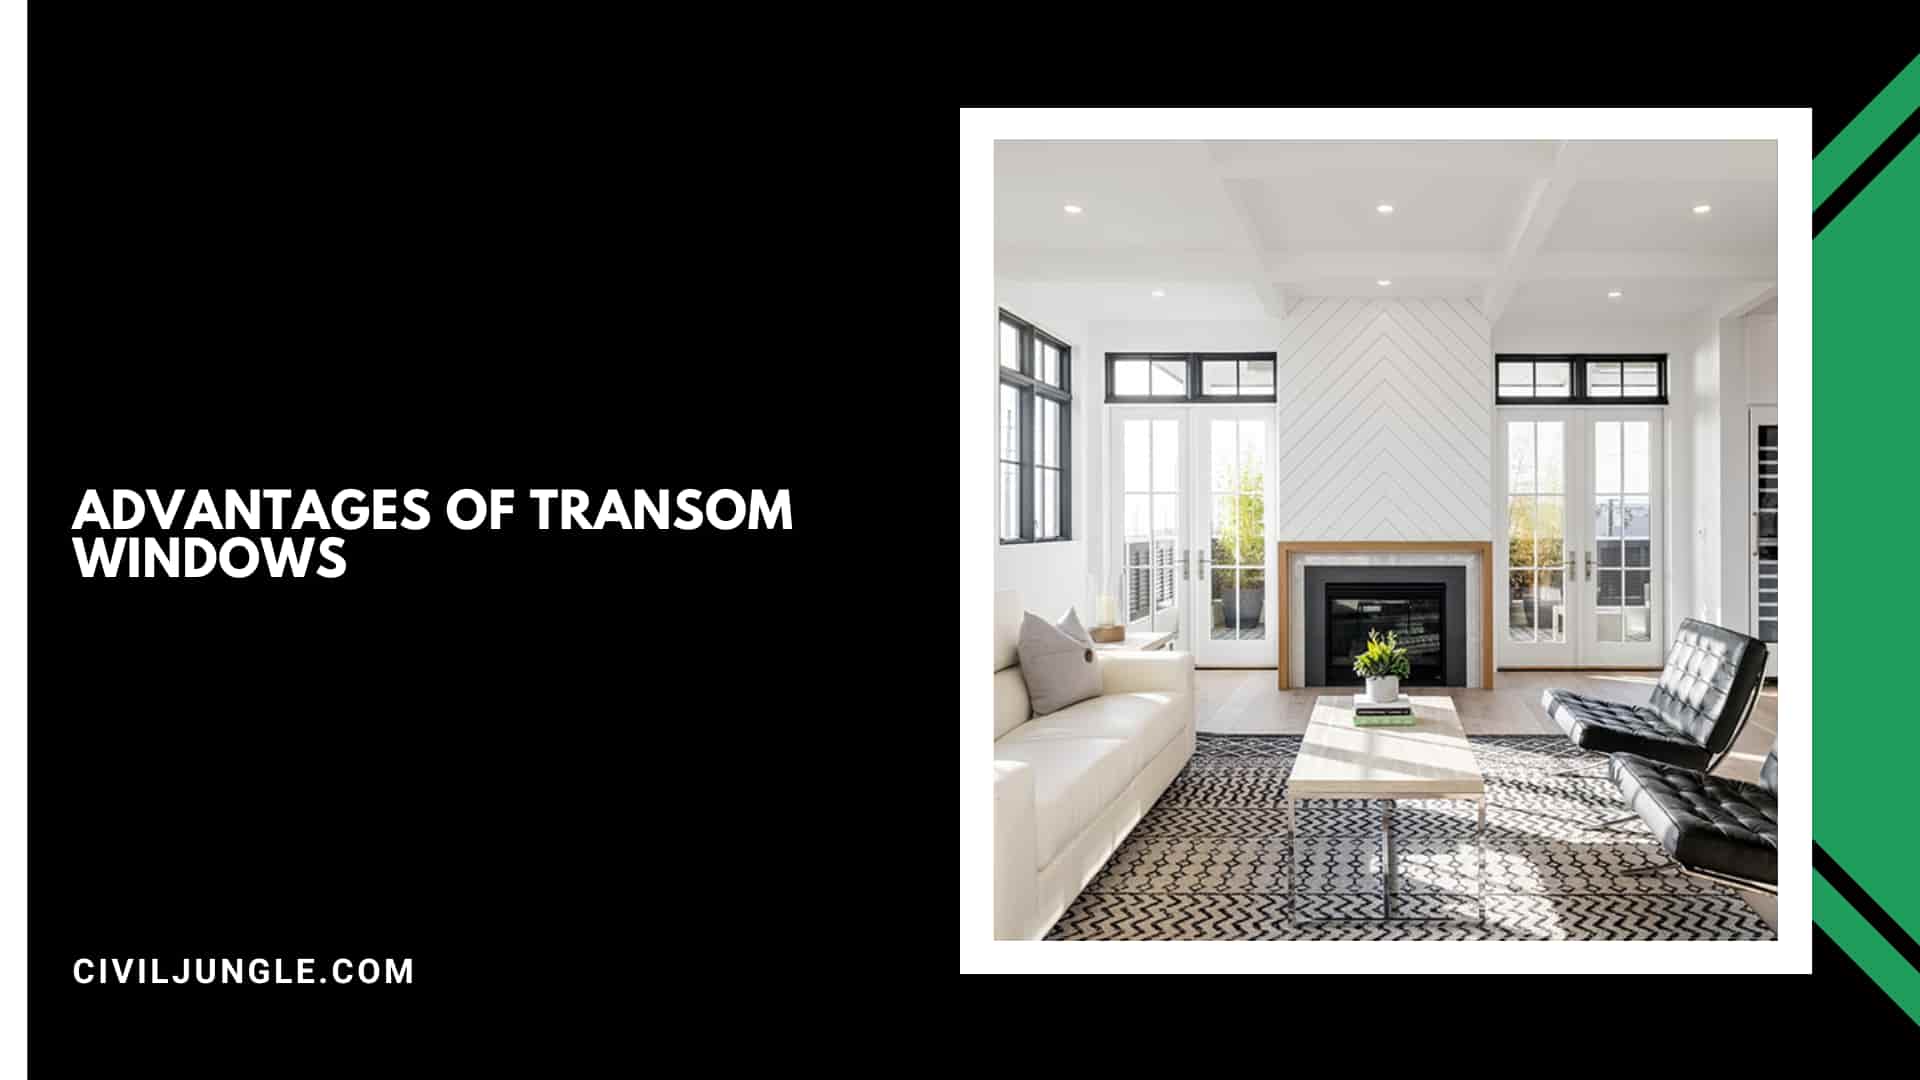 Advantages of Transom Windows